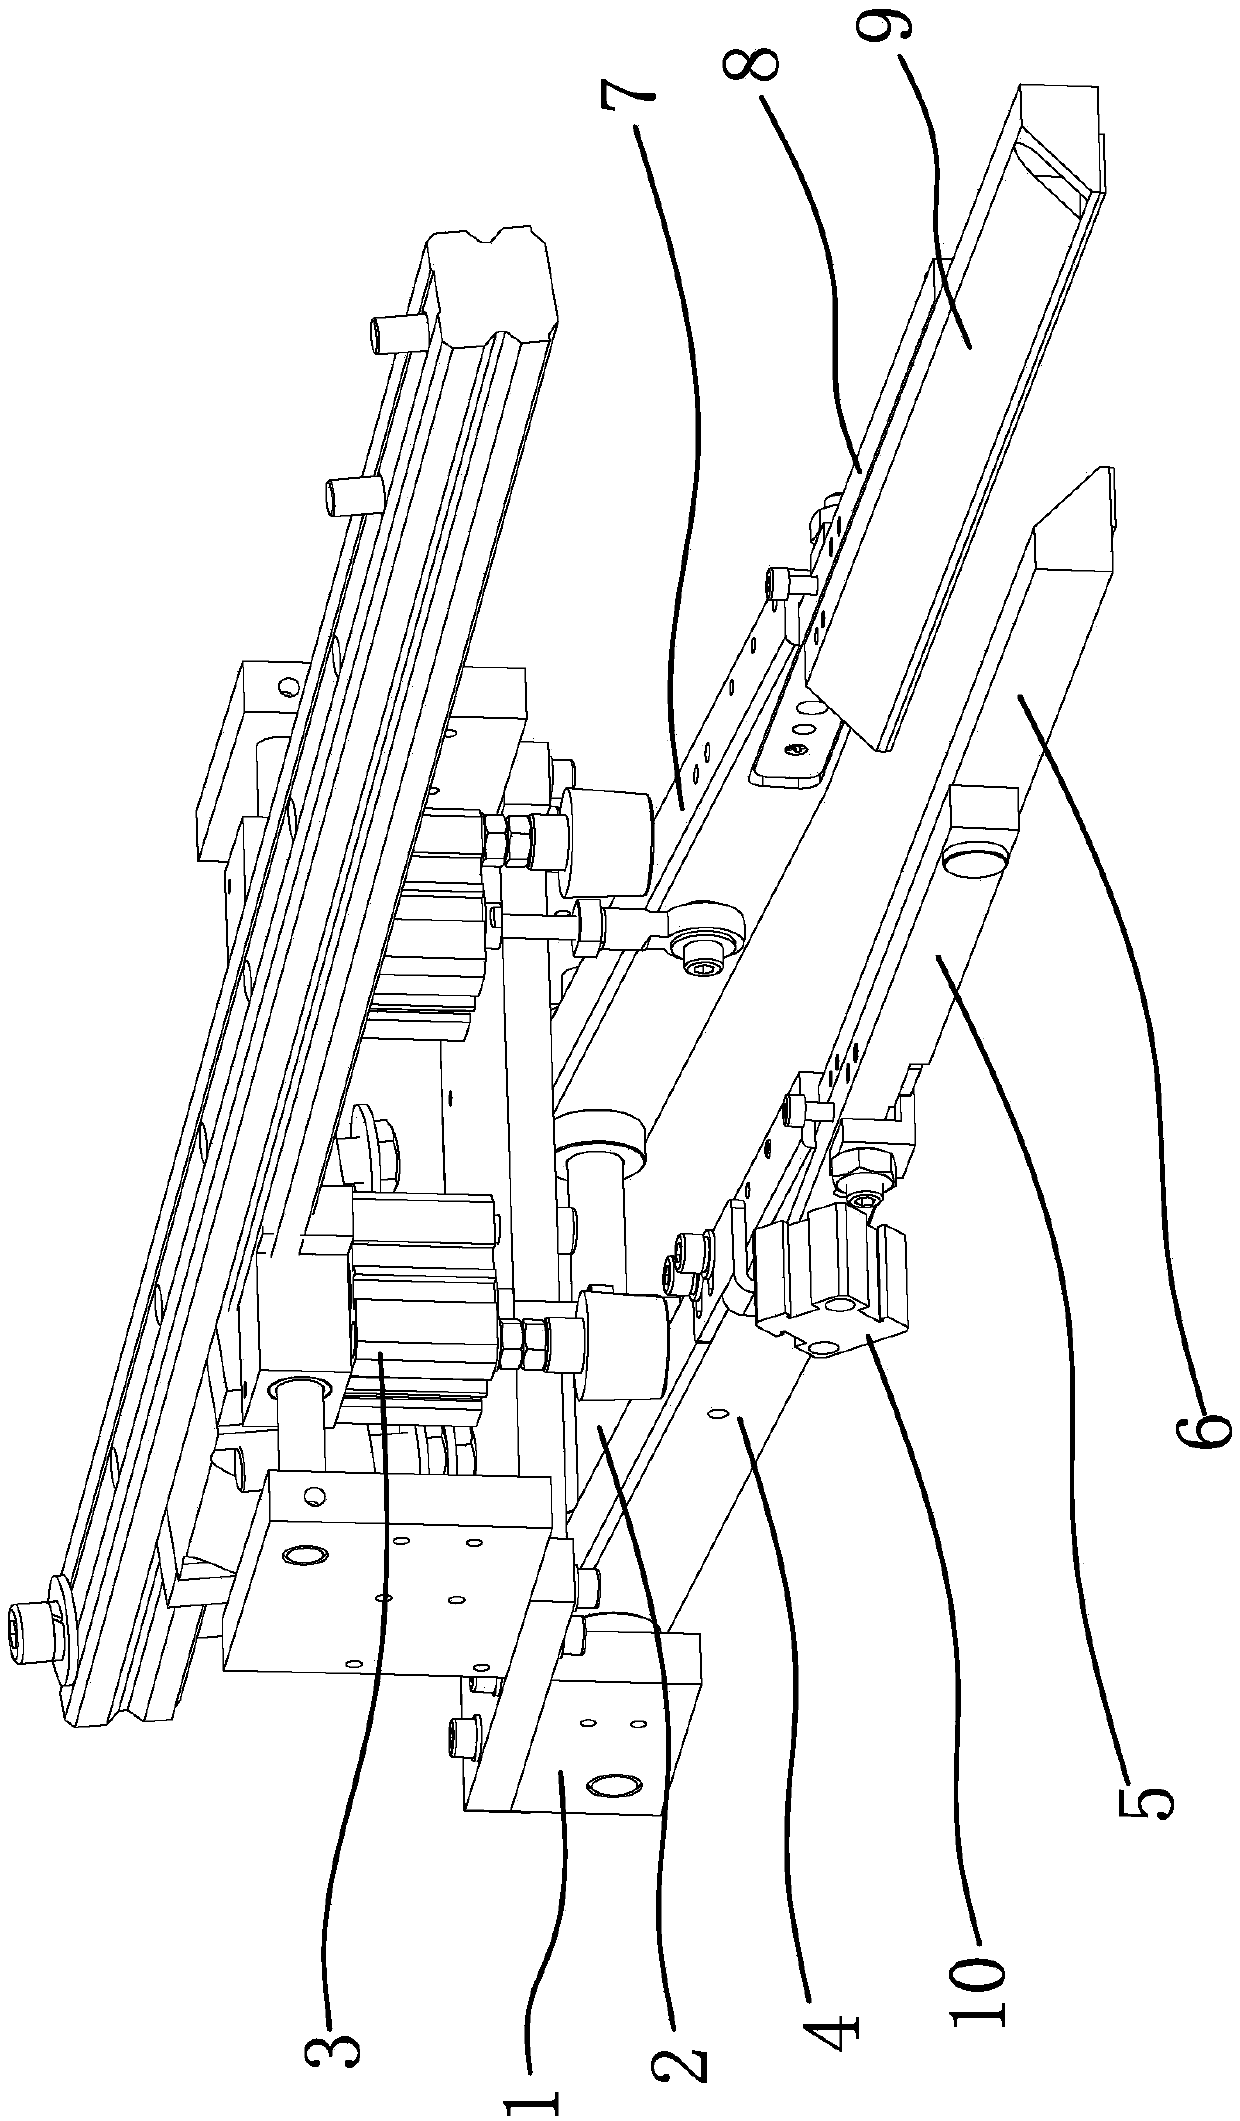 Big presser foot component structure of placket machine